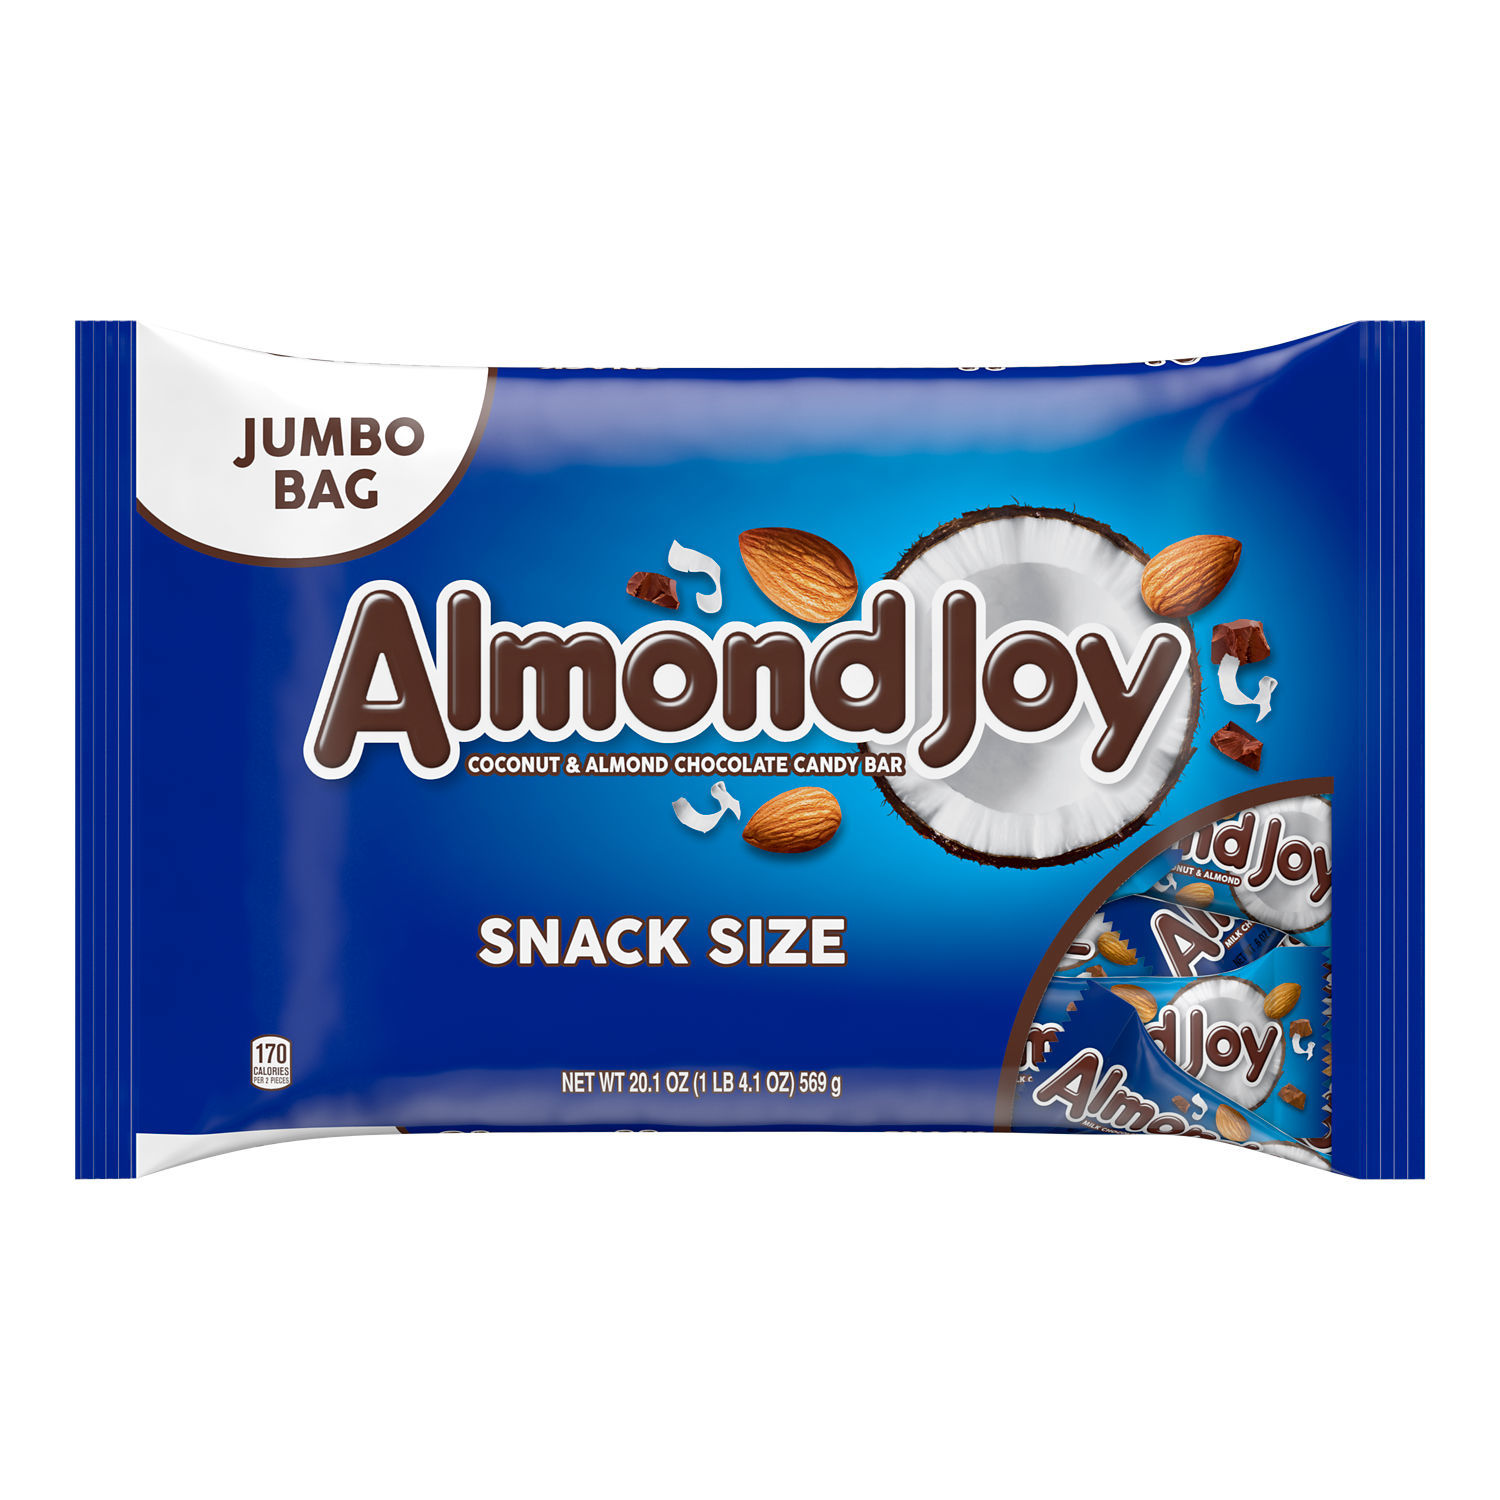 Almond Joy Coconut and Almond Chocolate Snack Size Candy, Jumbo Bag 20.1 oz - image 1 of 7